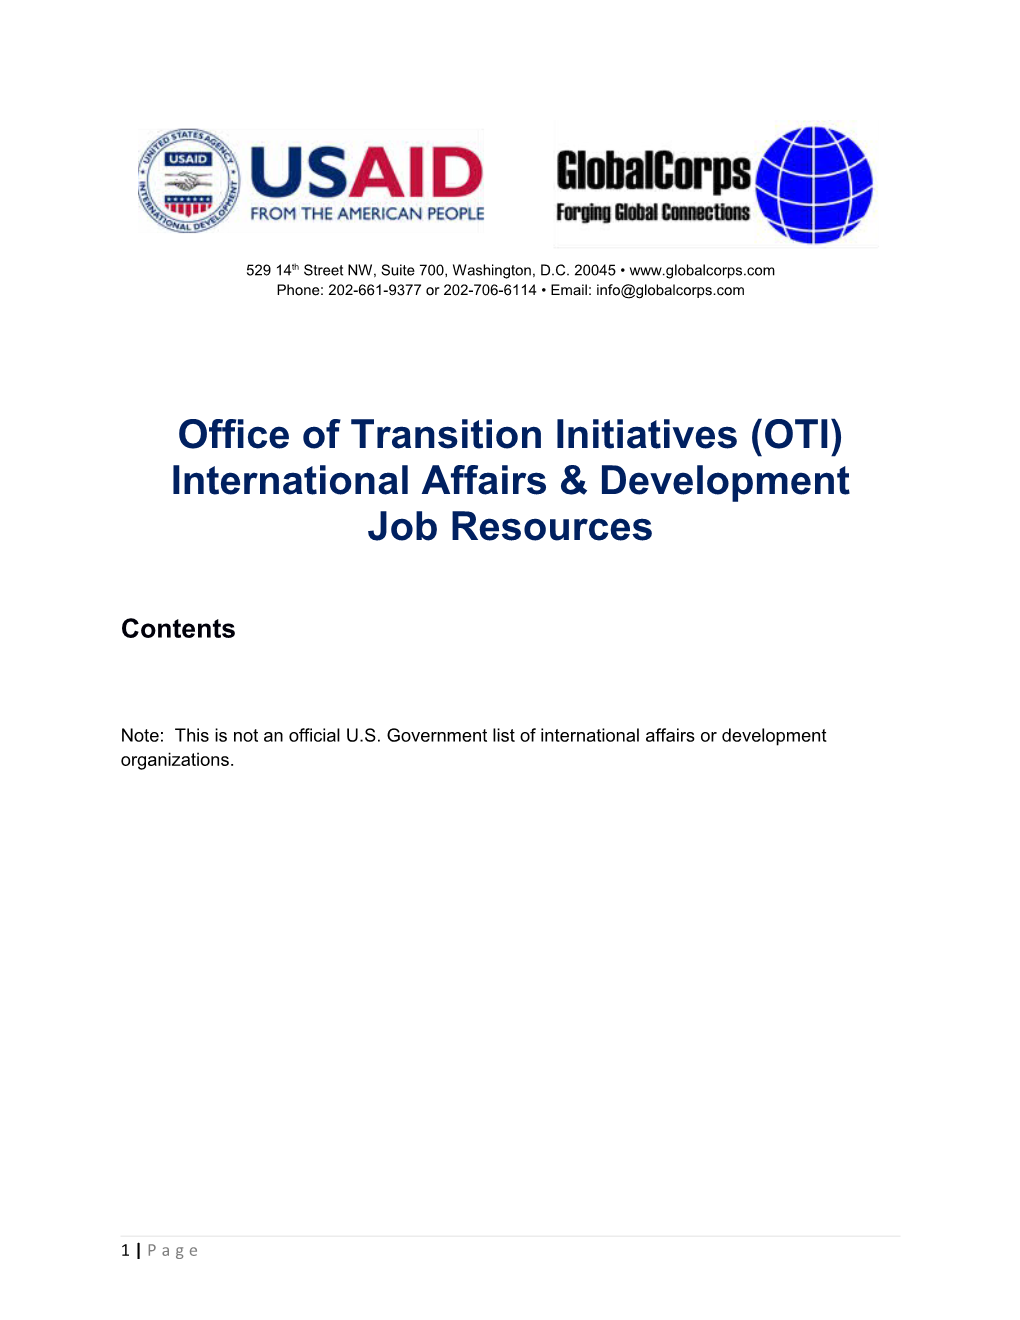 Office of Transition Initiatives (OTI) International Affairs & Development